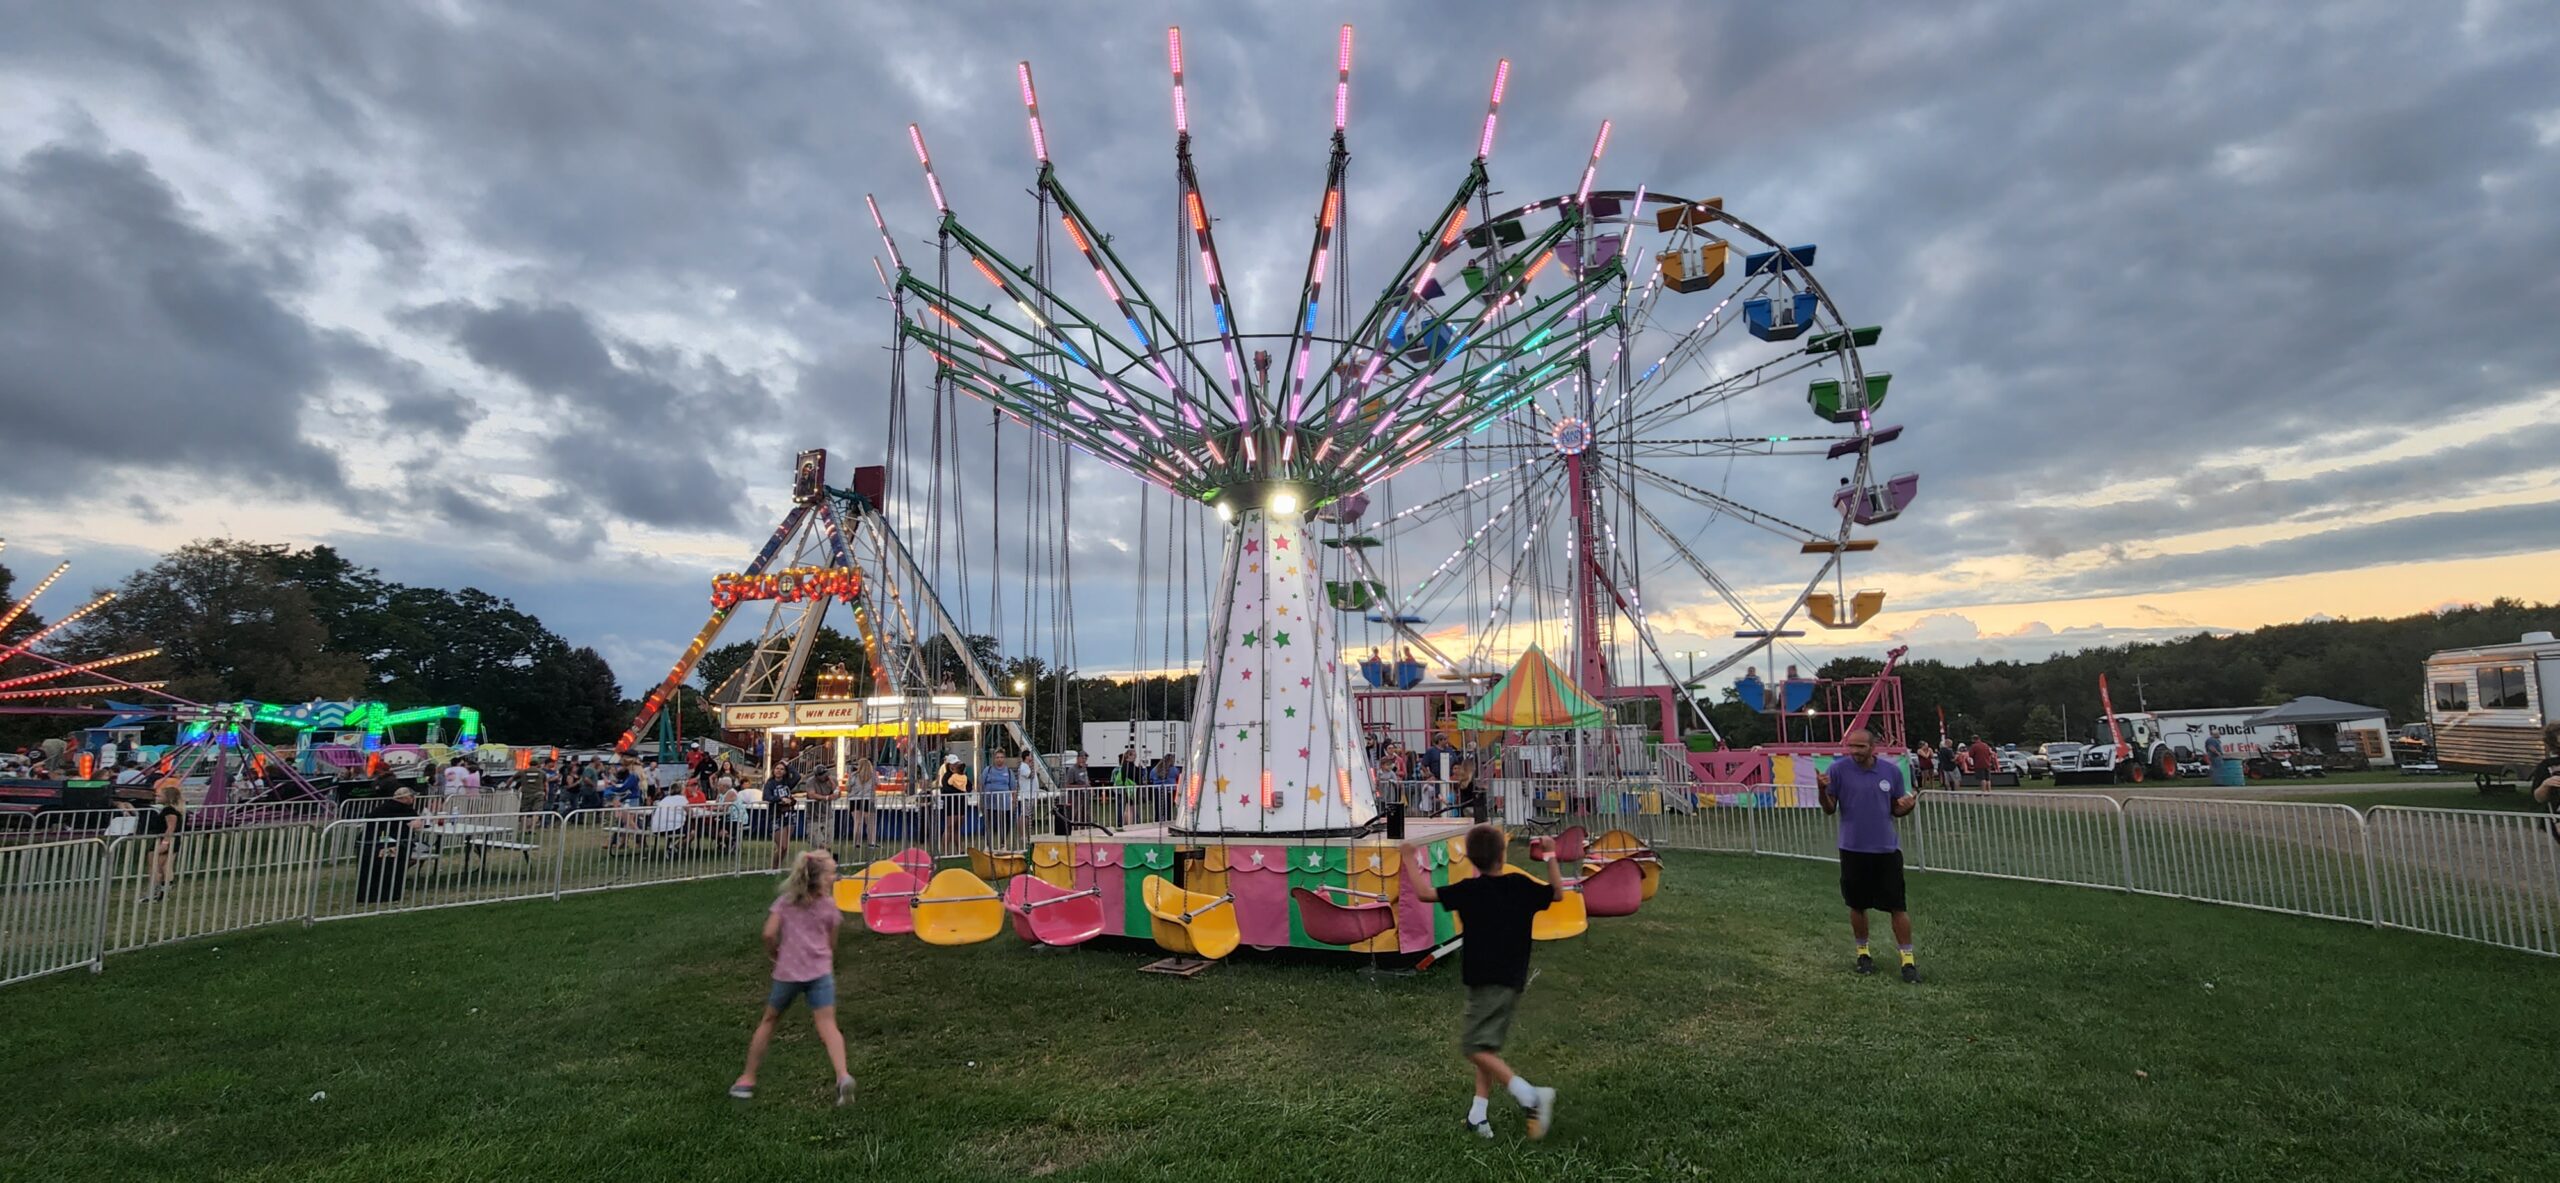 Crawford County’s Fair Season: A Whirlwind of Fun, Food, and Festivities!